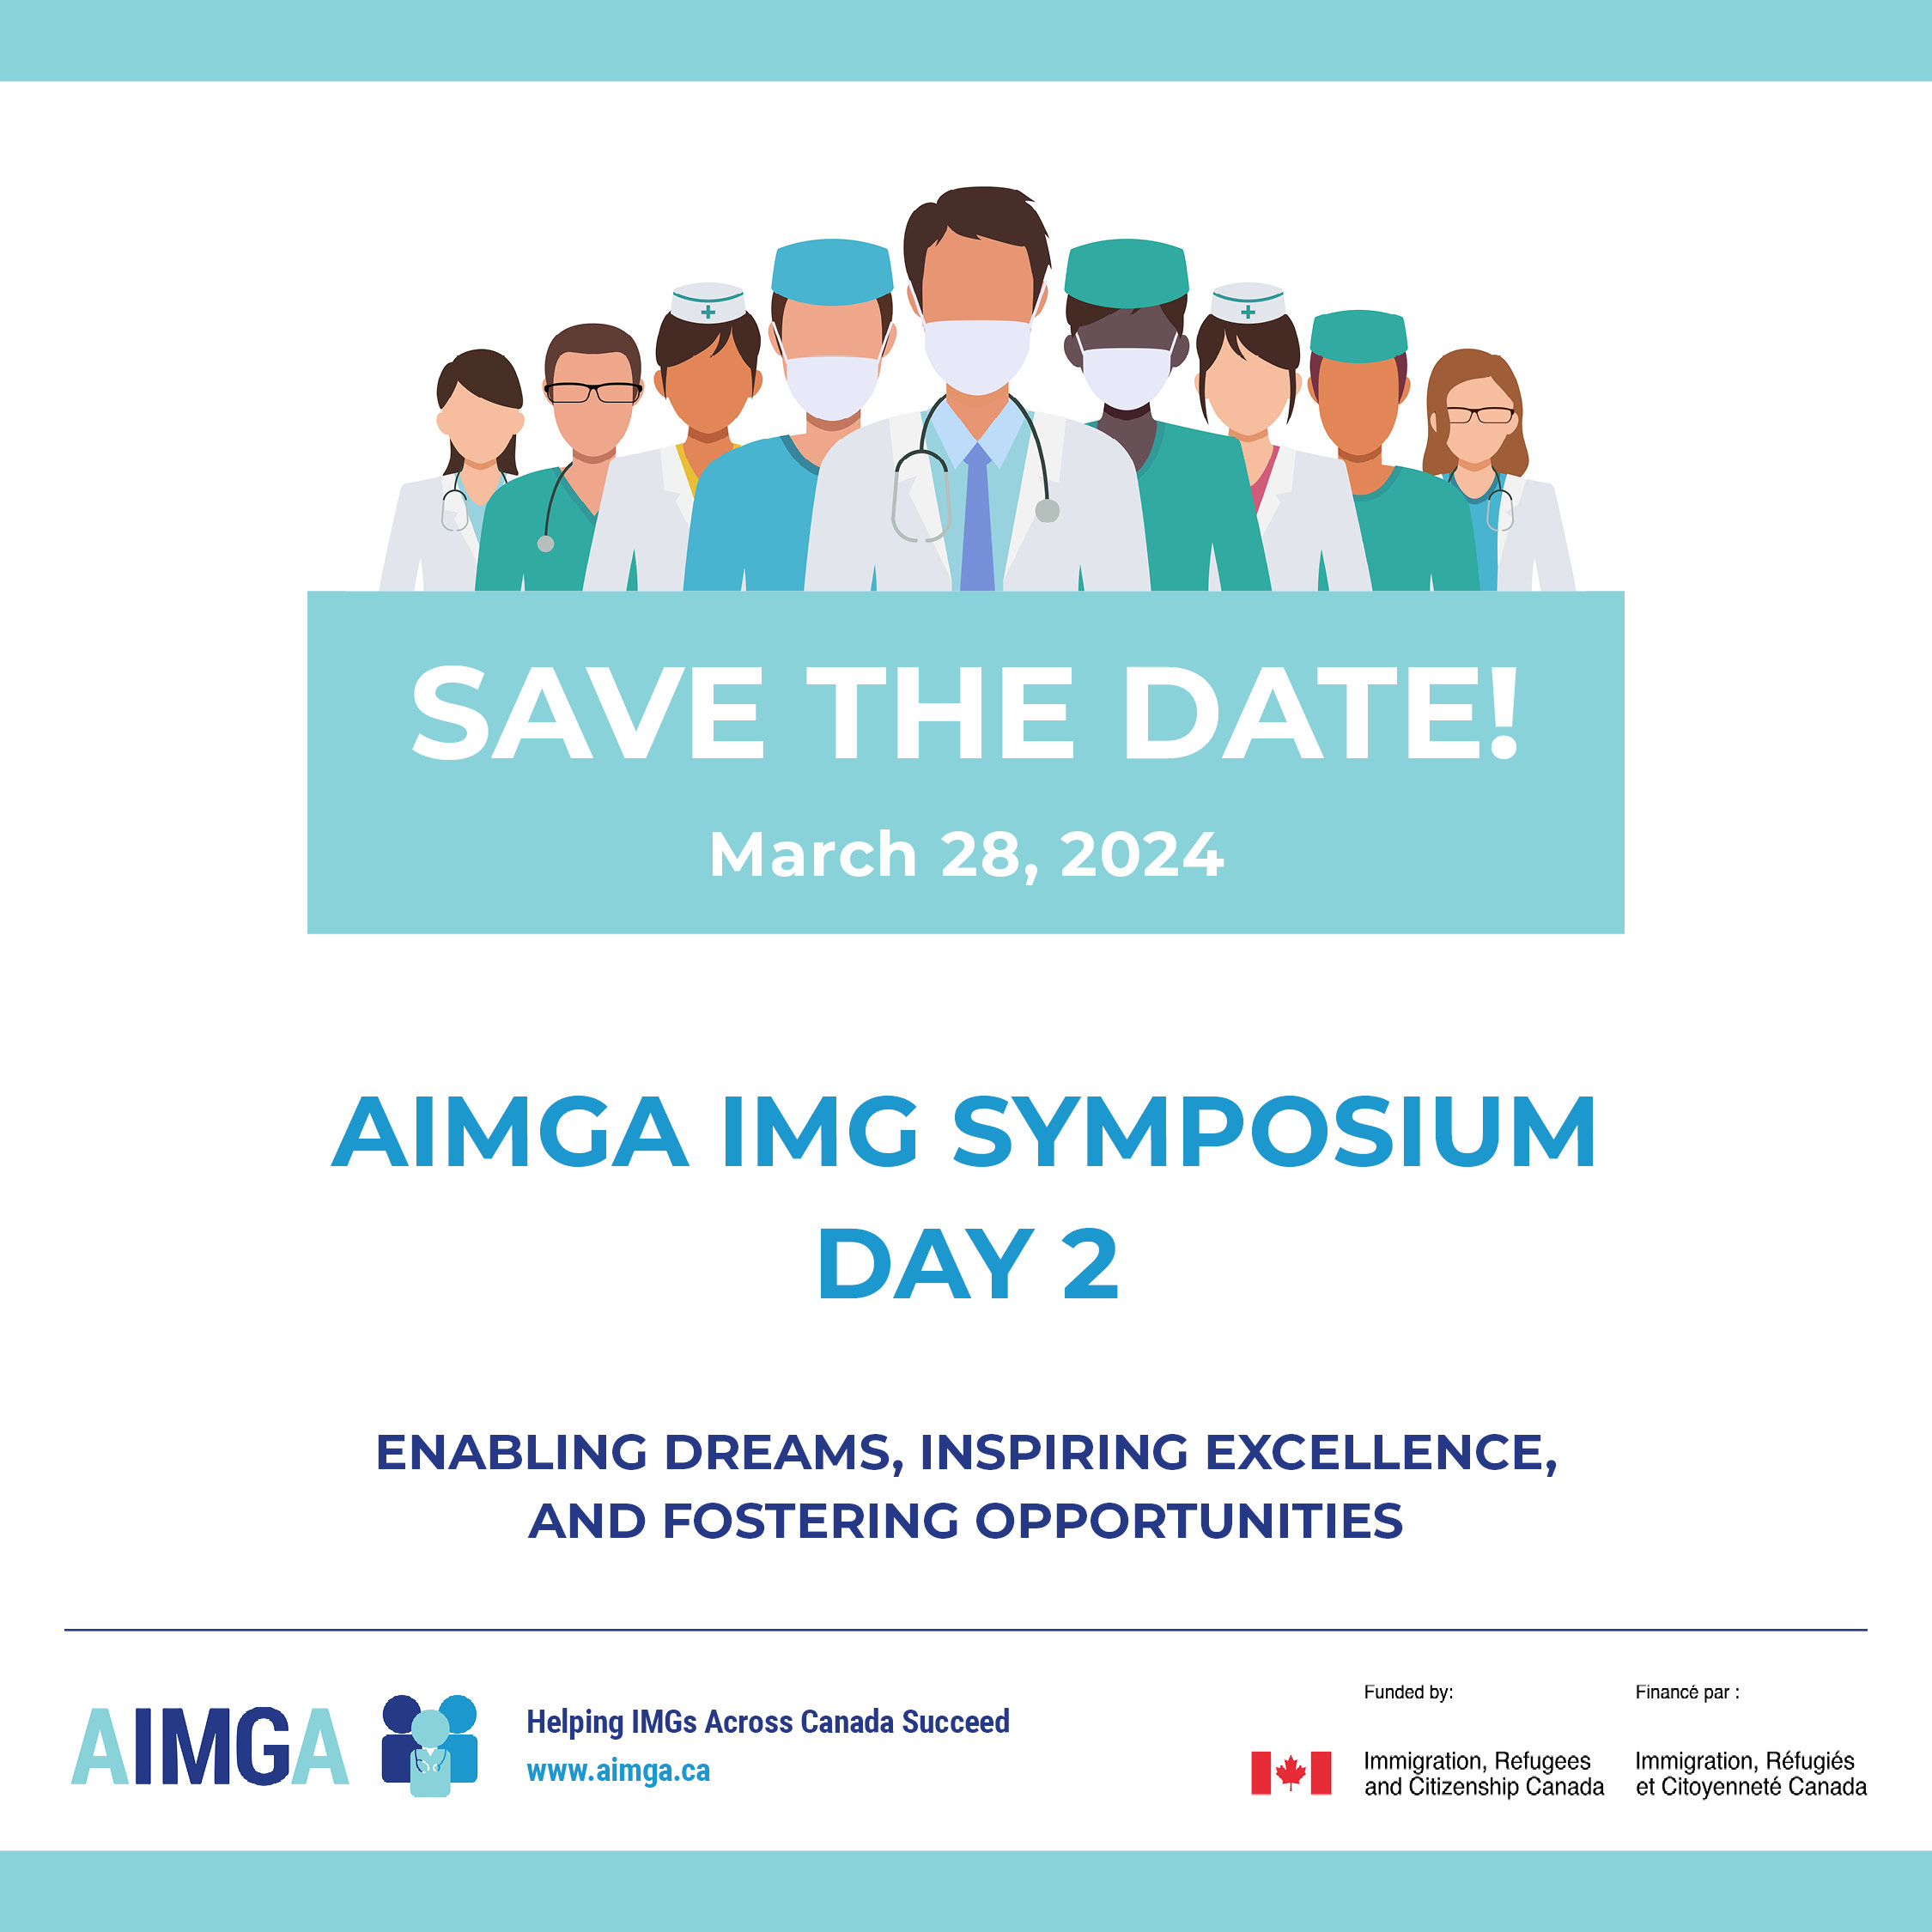 AIMGA – Helping IMGs Across Canada